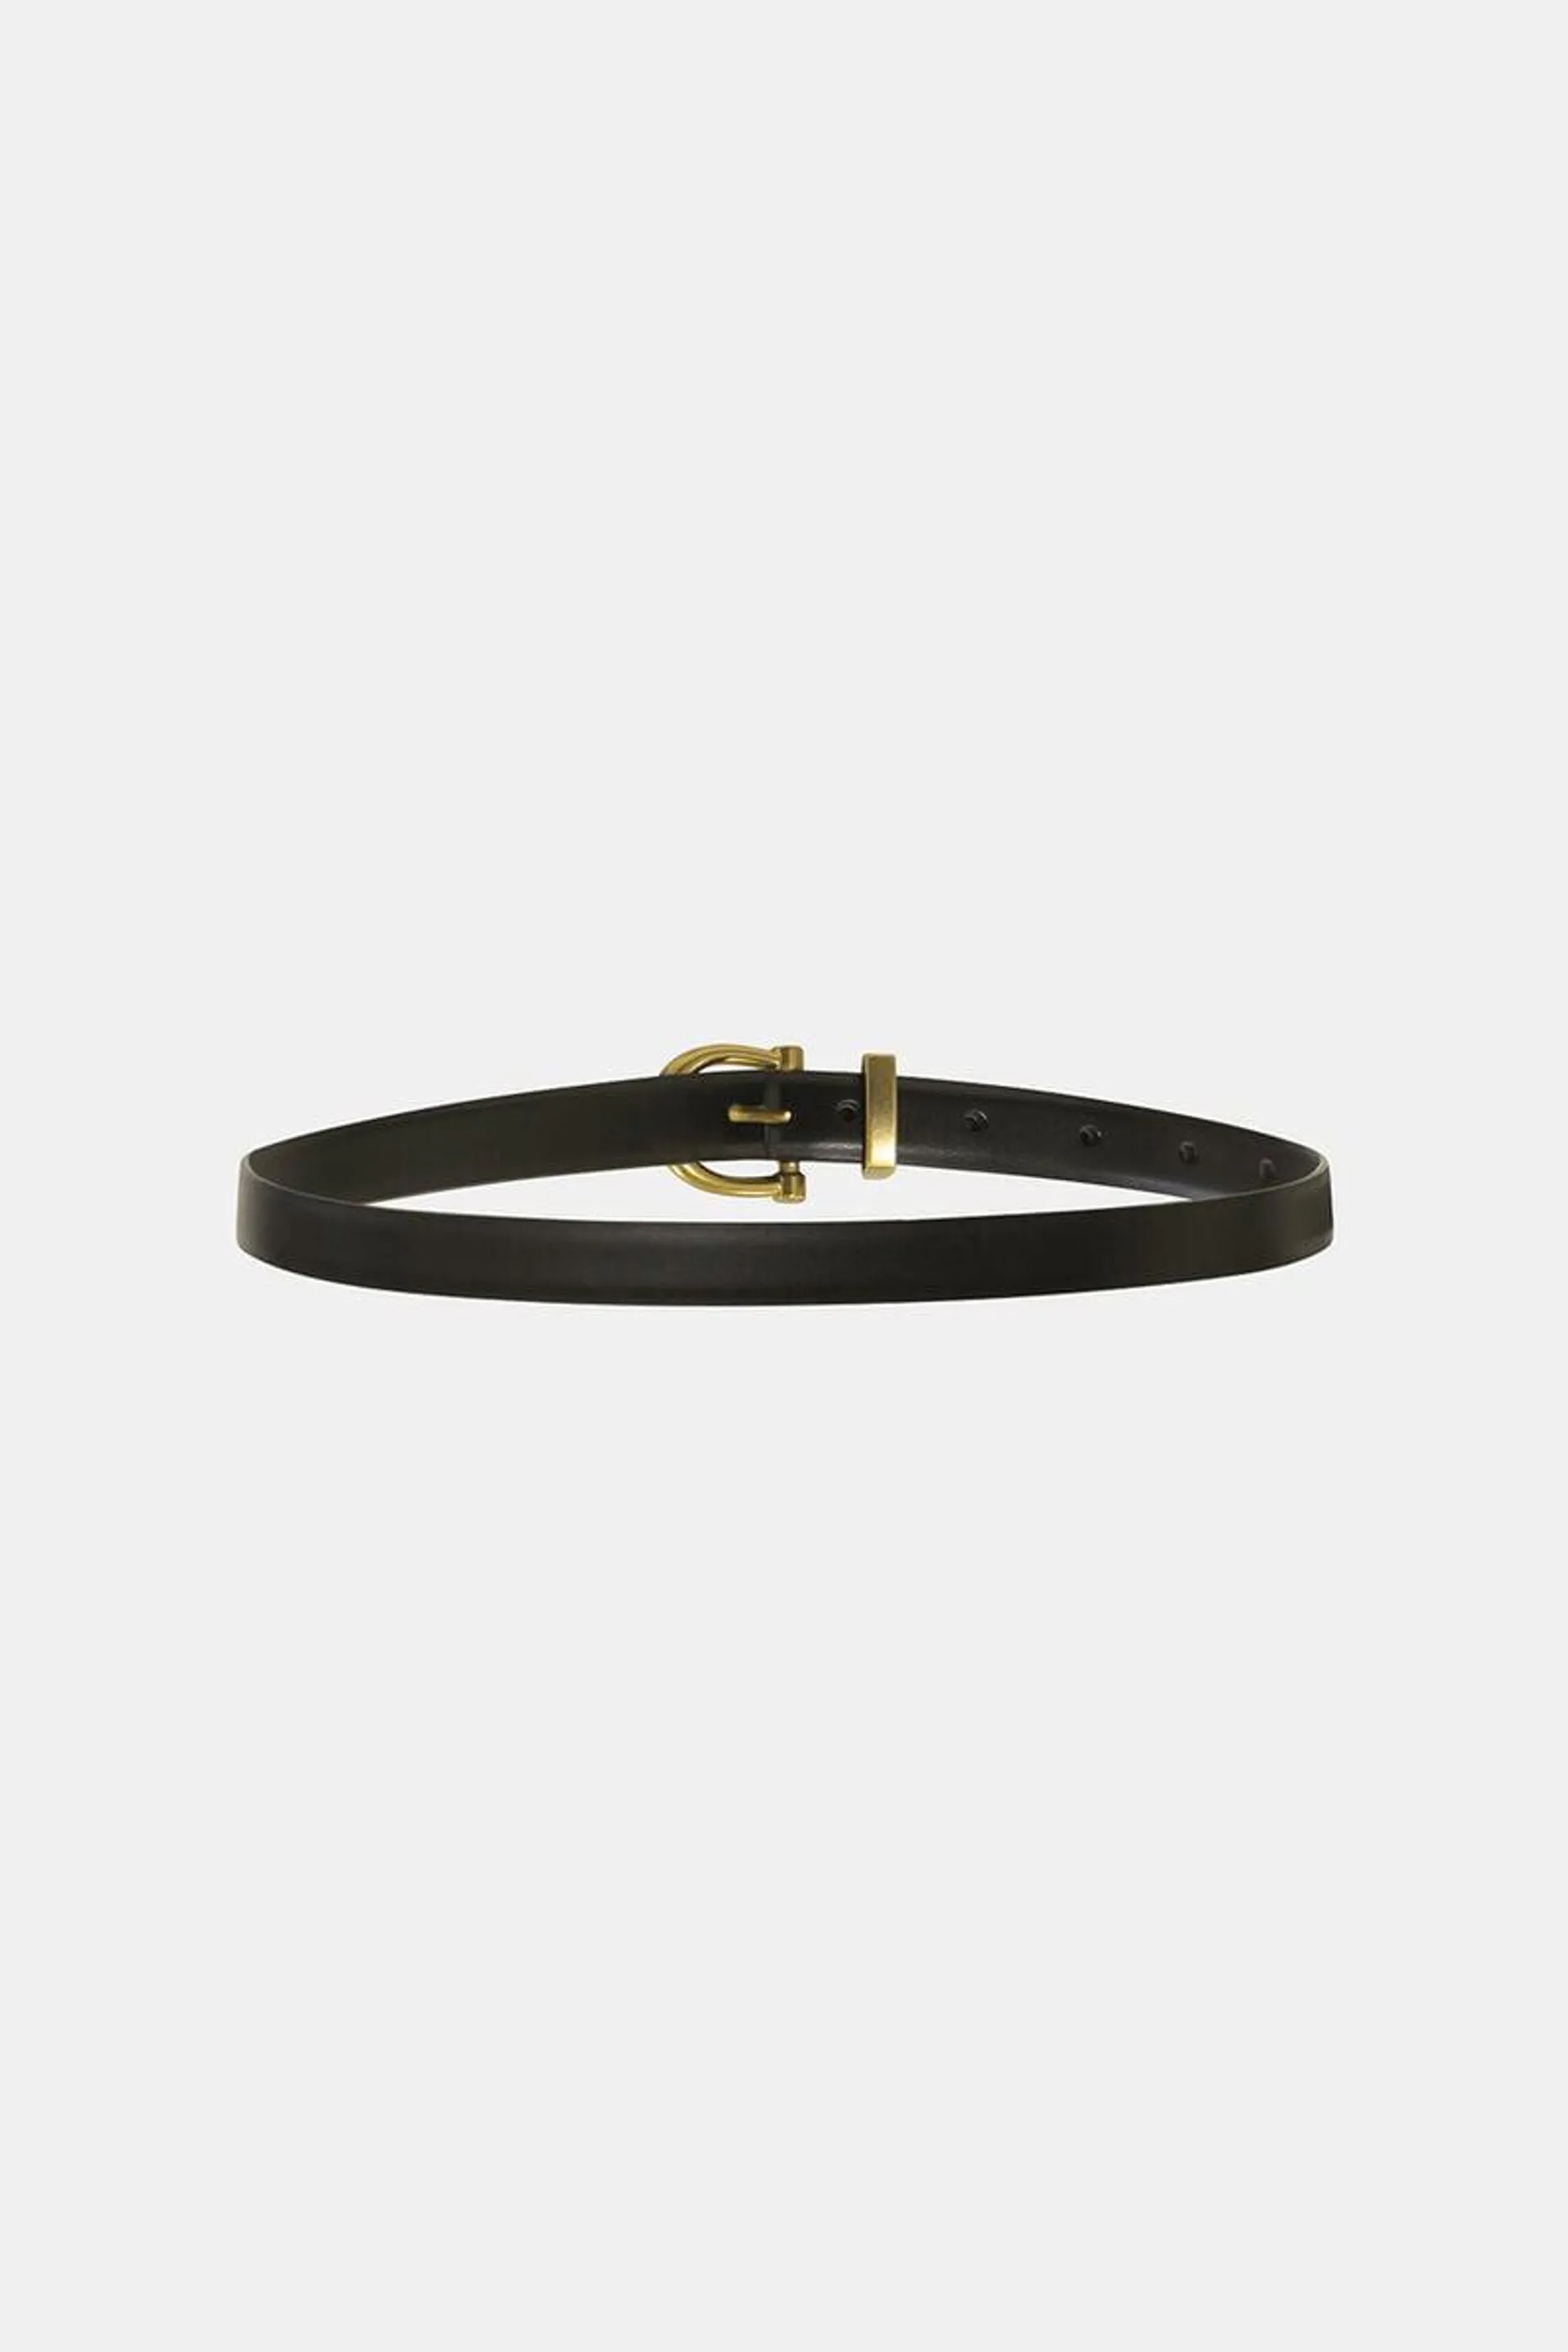 evie belt in black gold